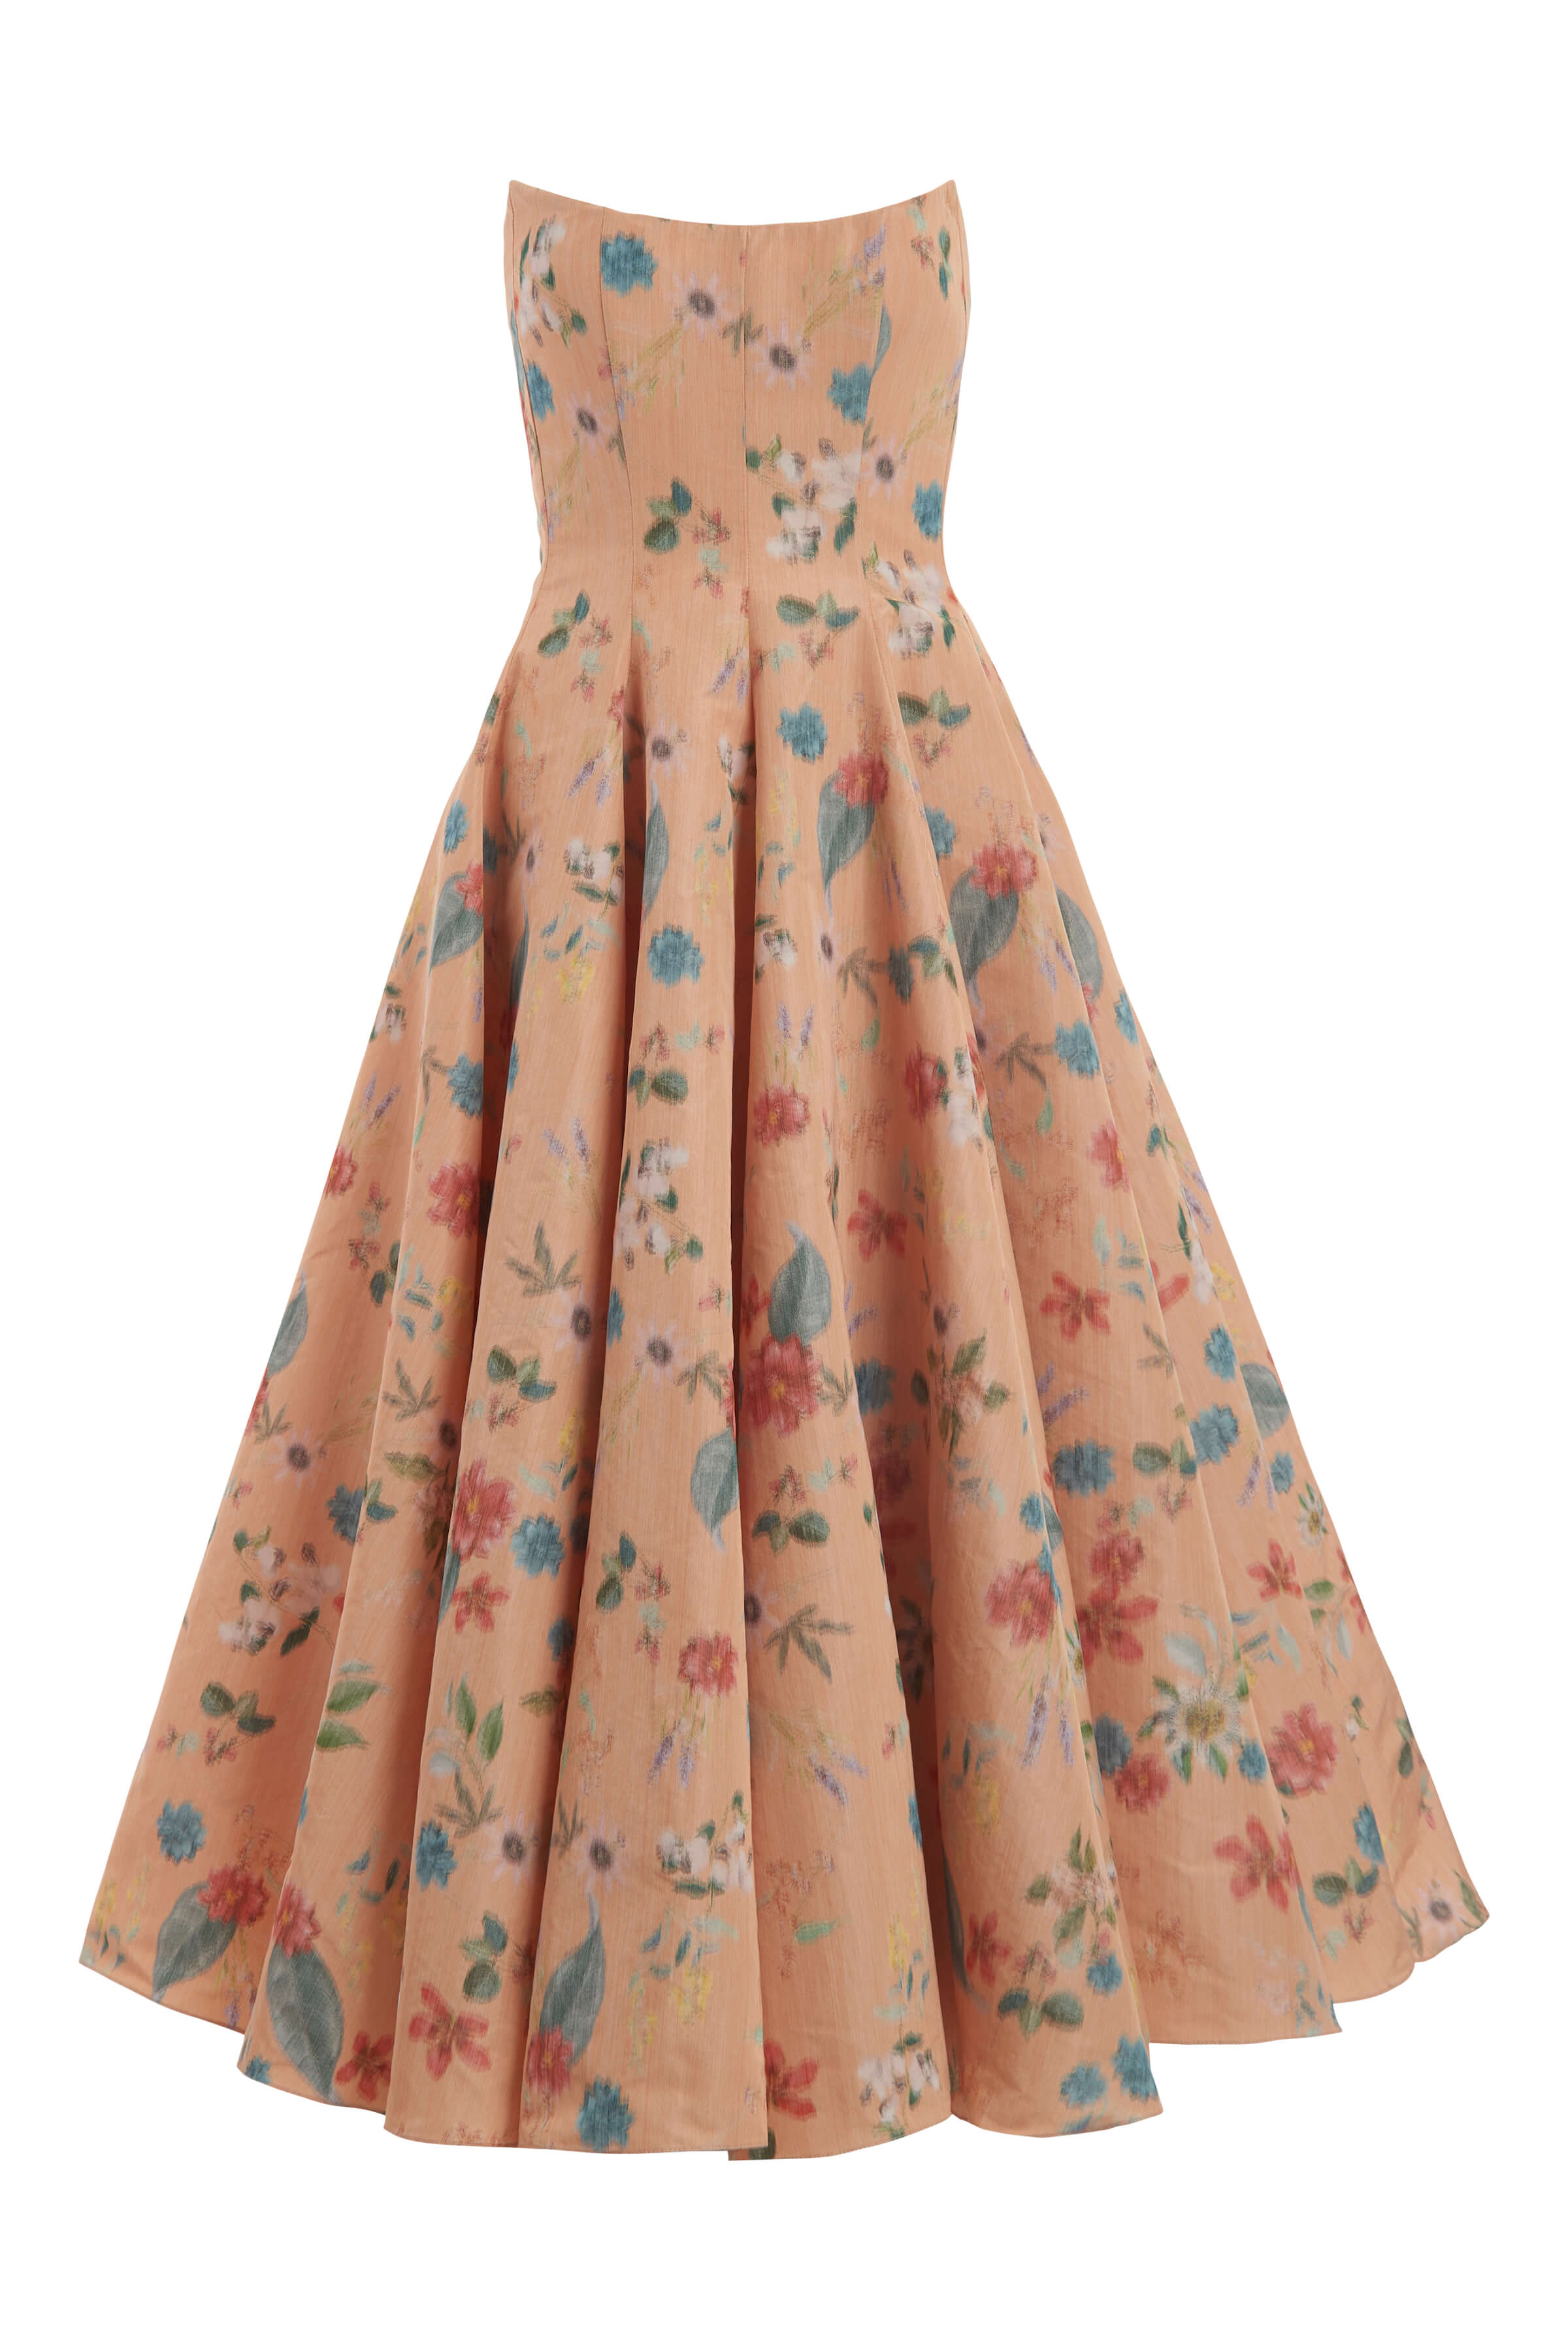 Rousseau Floral Ikat Strapless Midi Dress